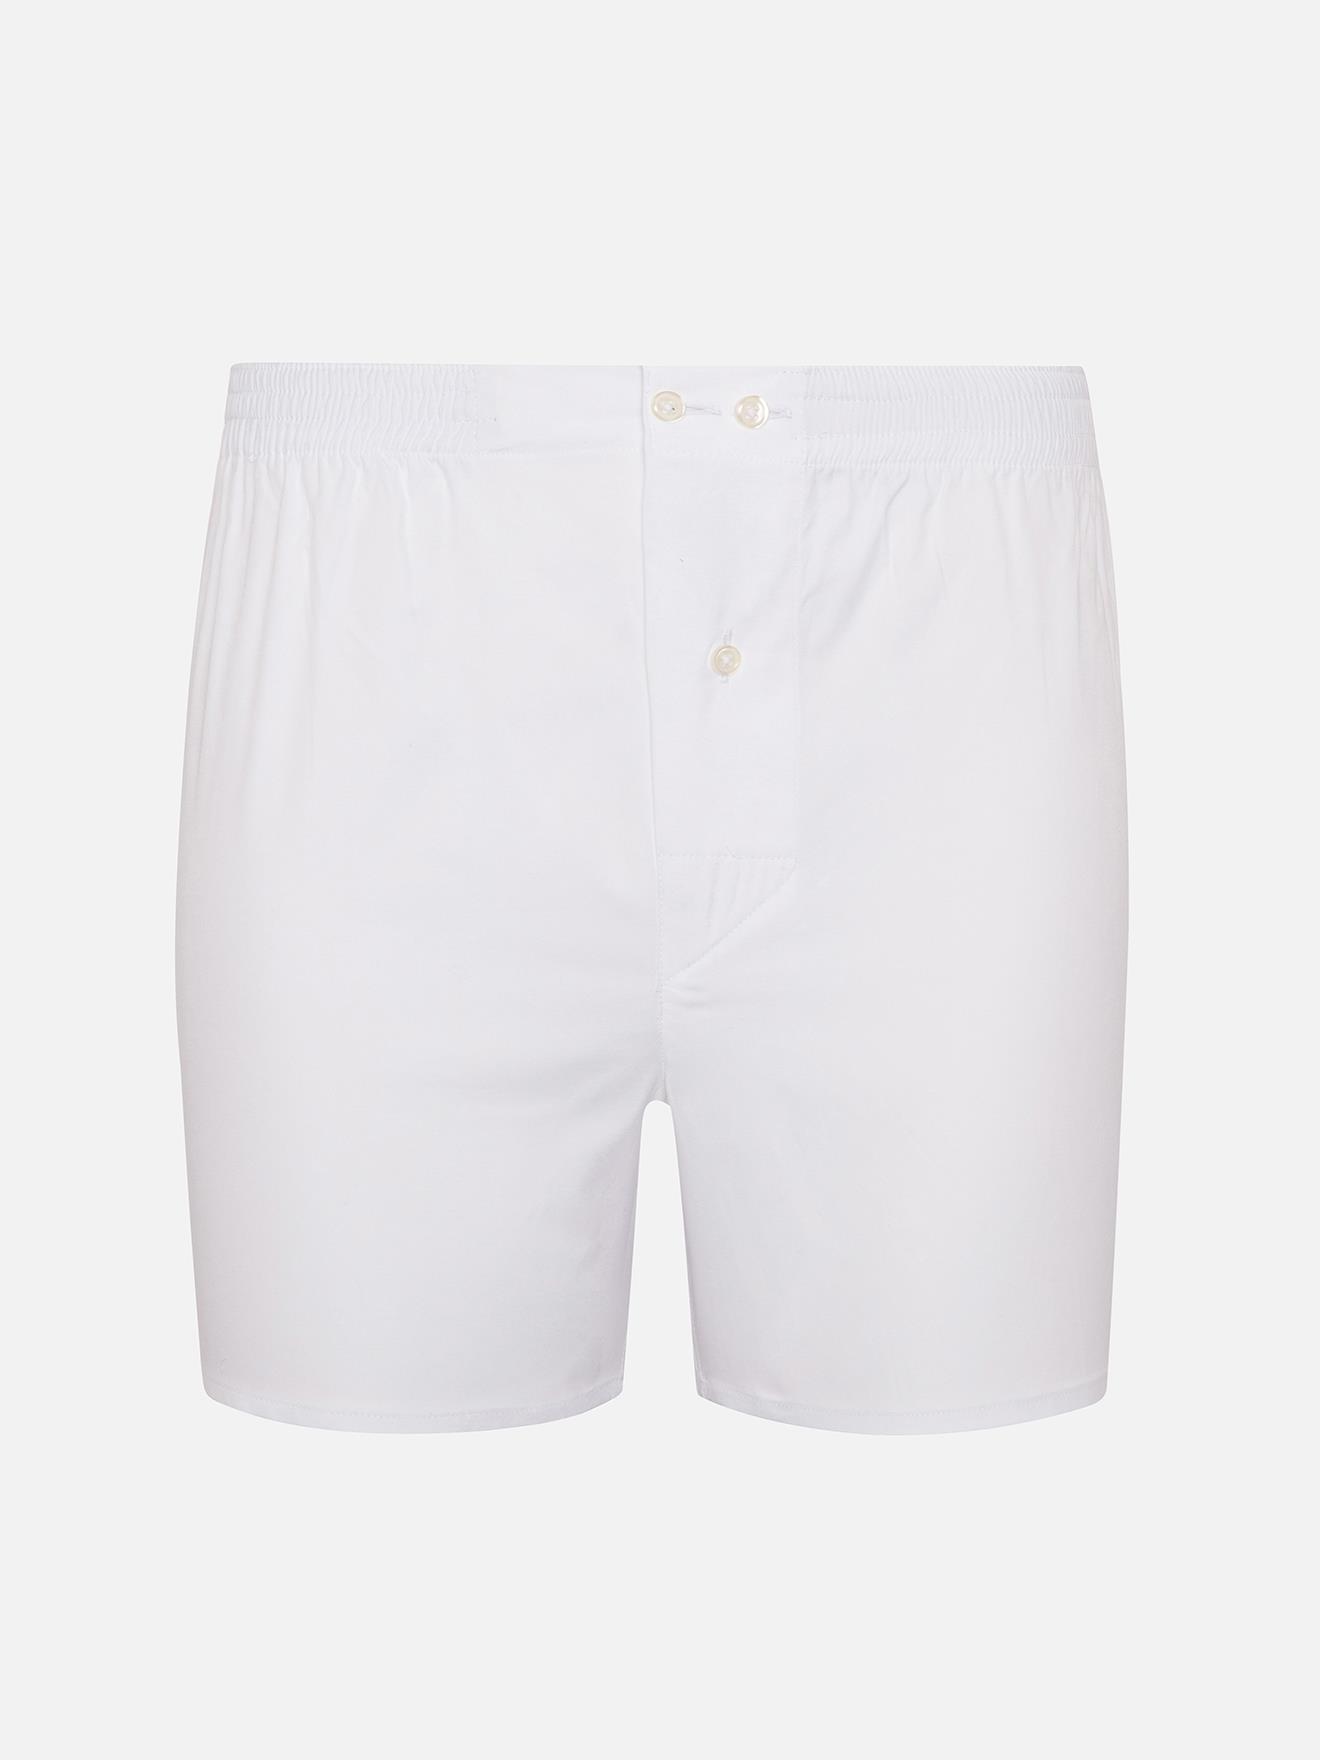 White point pine boxer shorts - White - Pin Point - Male - Cafe Coton